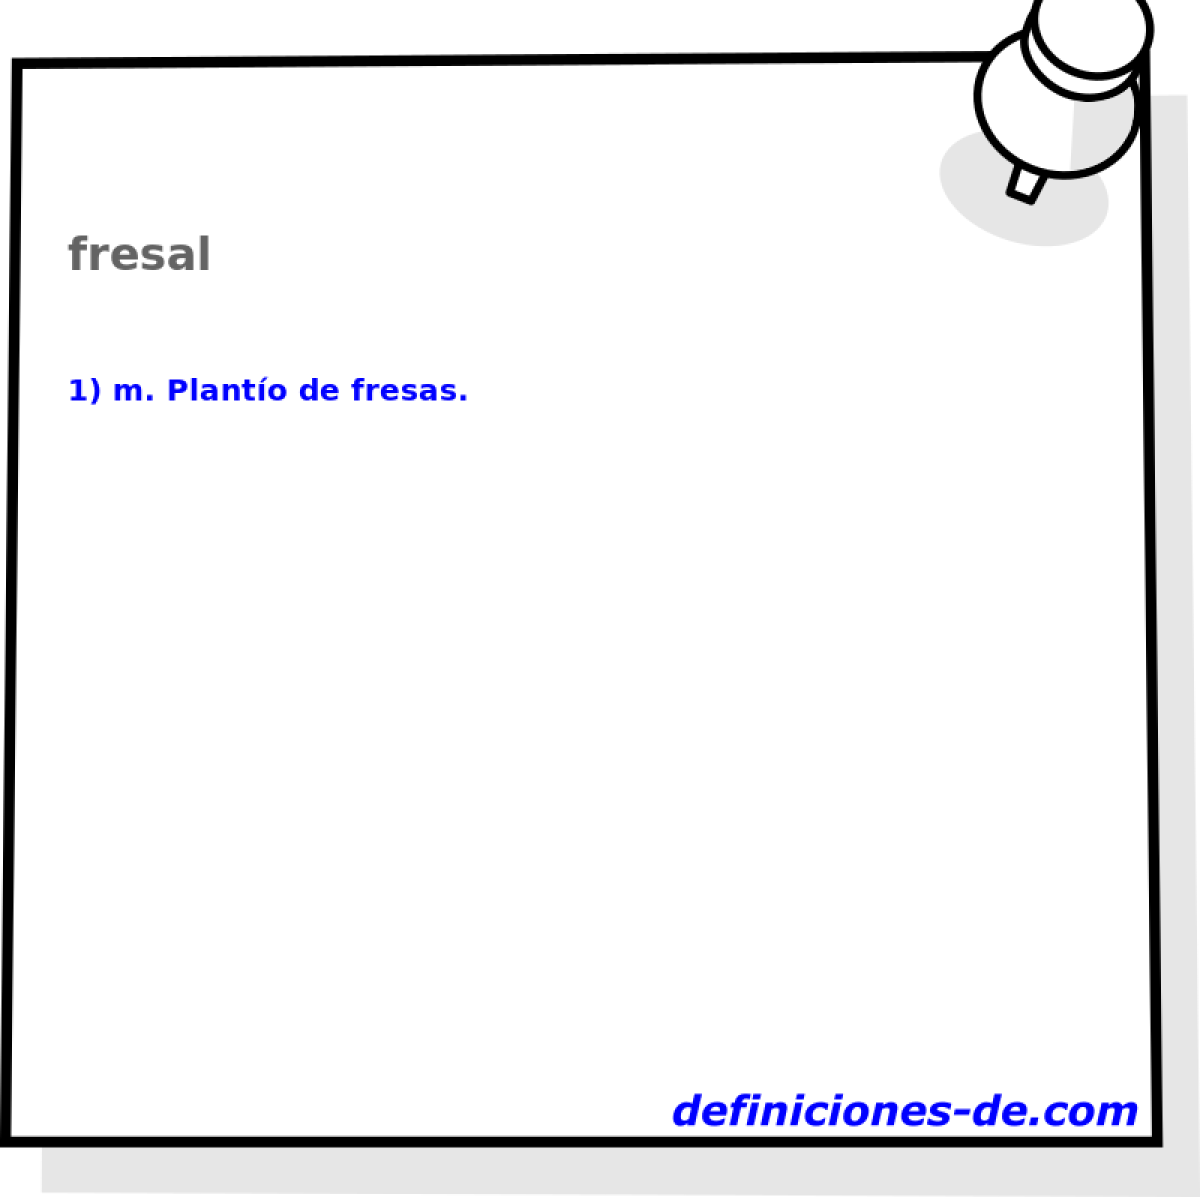 fresal 